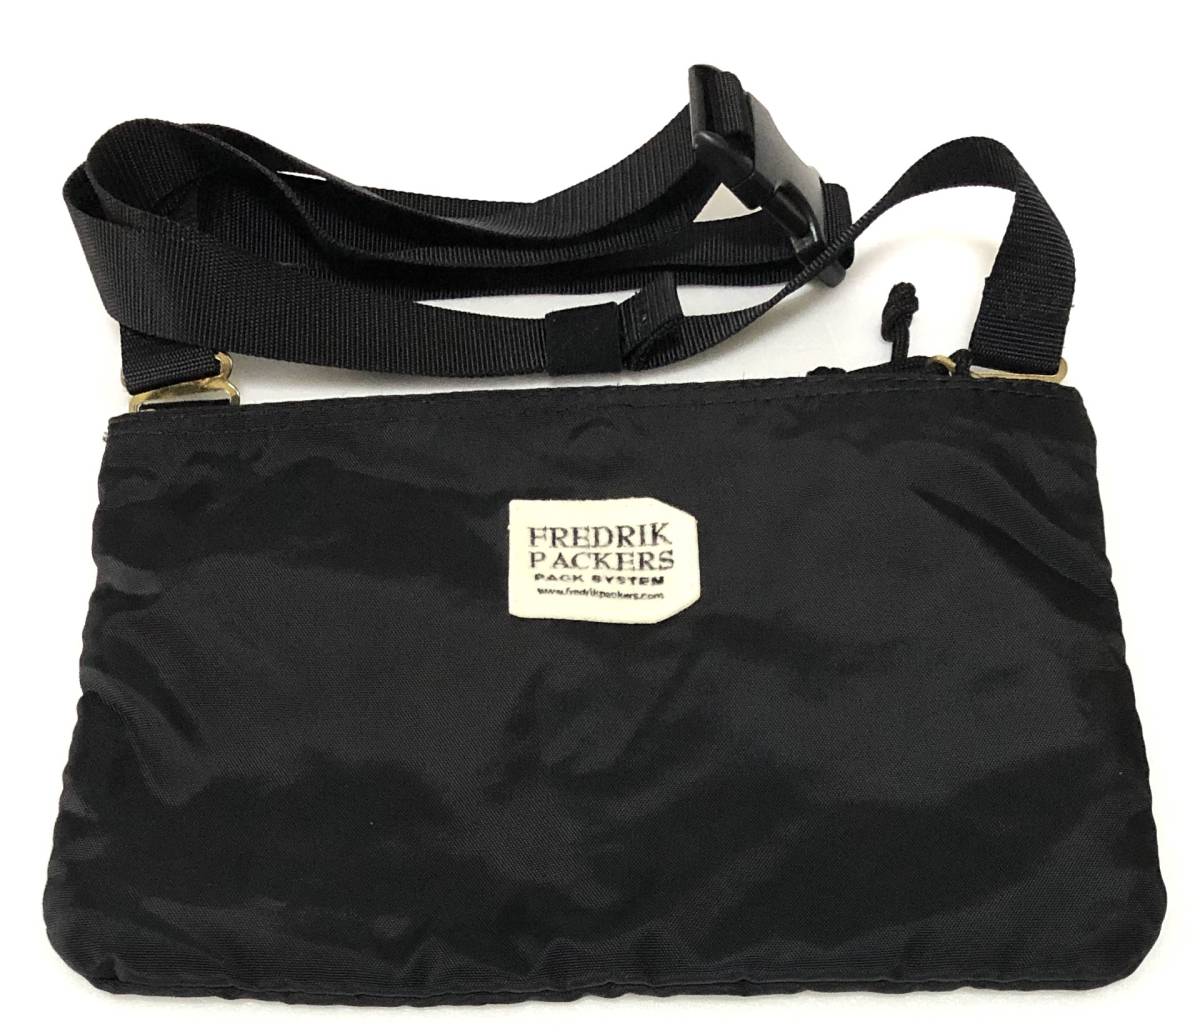 FREDRIK PACKERS Fredric paker zsakoshu Mini shoulder bag black black pouch 4295